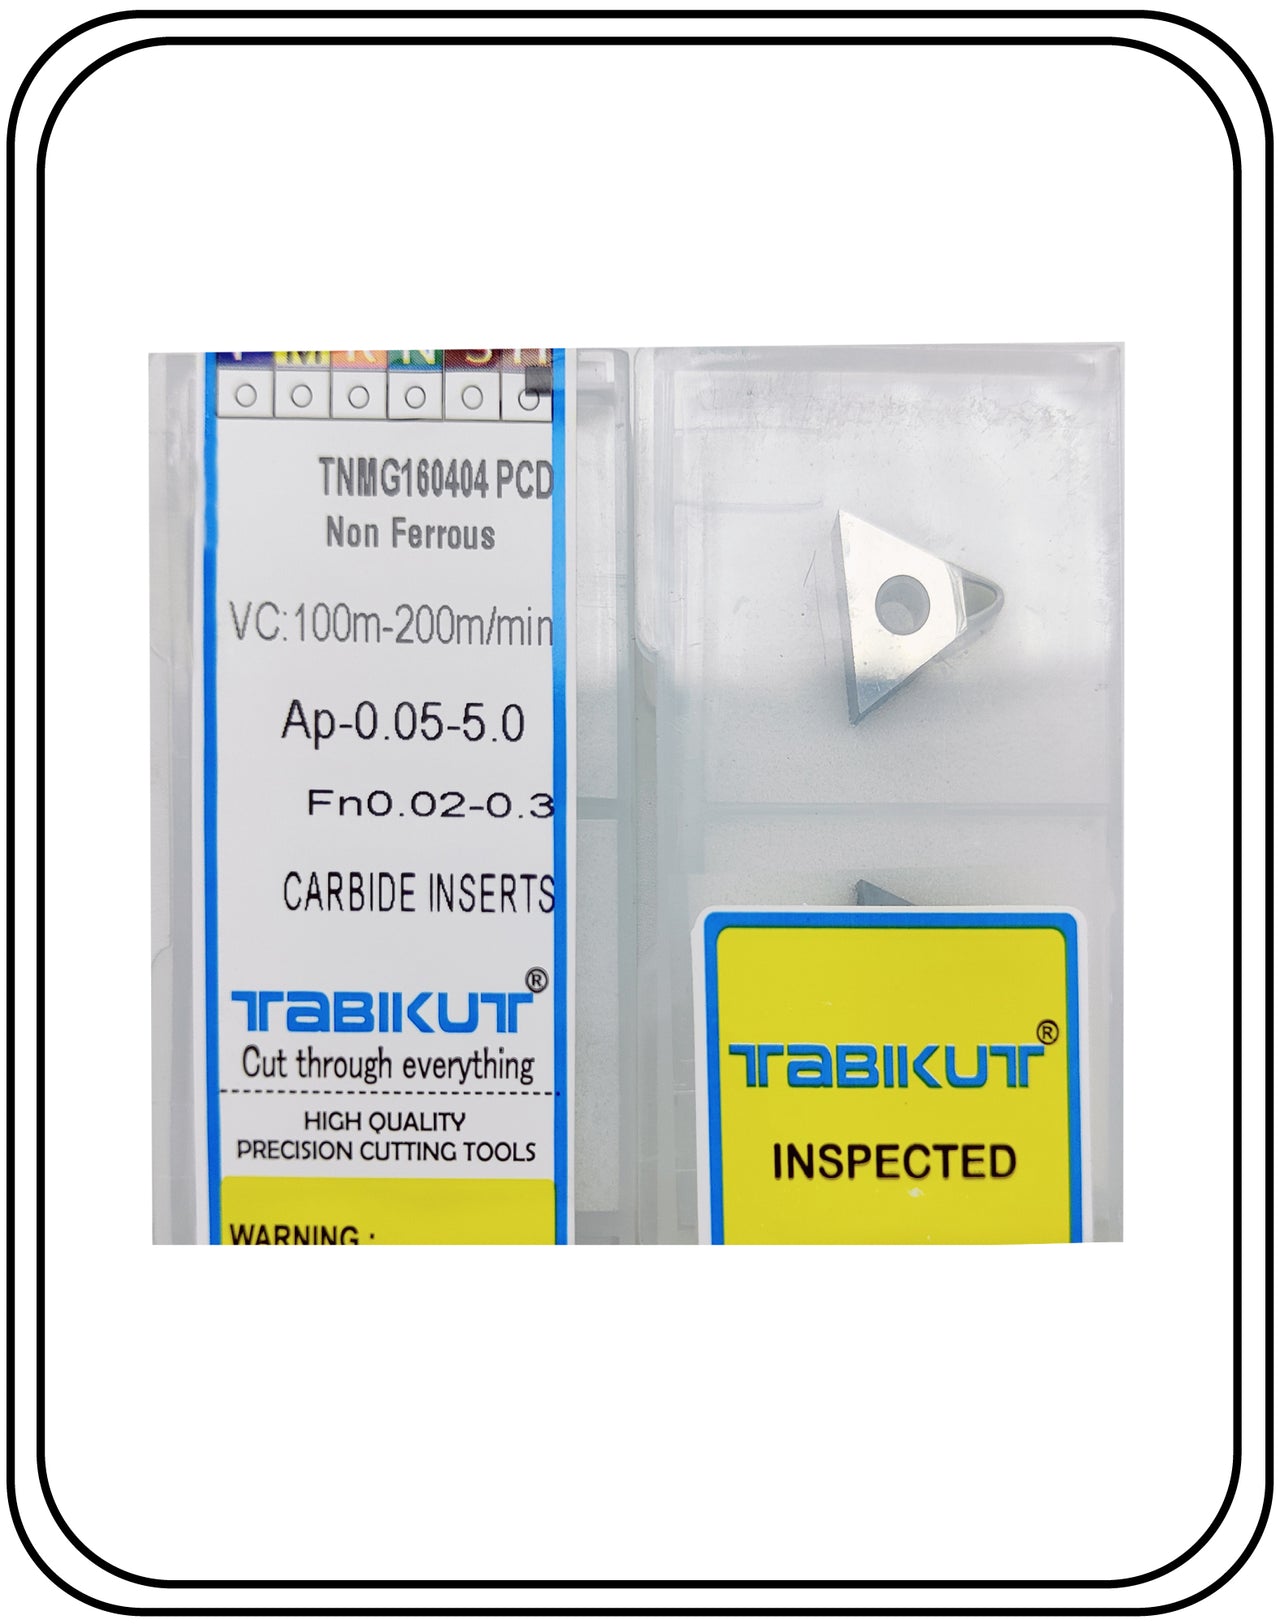 TNMG160404/08 PCD Tabikut insert pack of 2